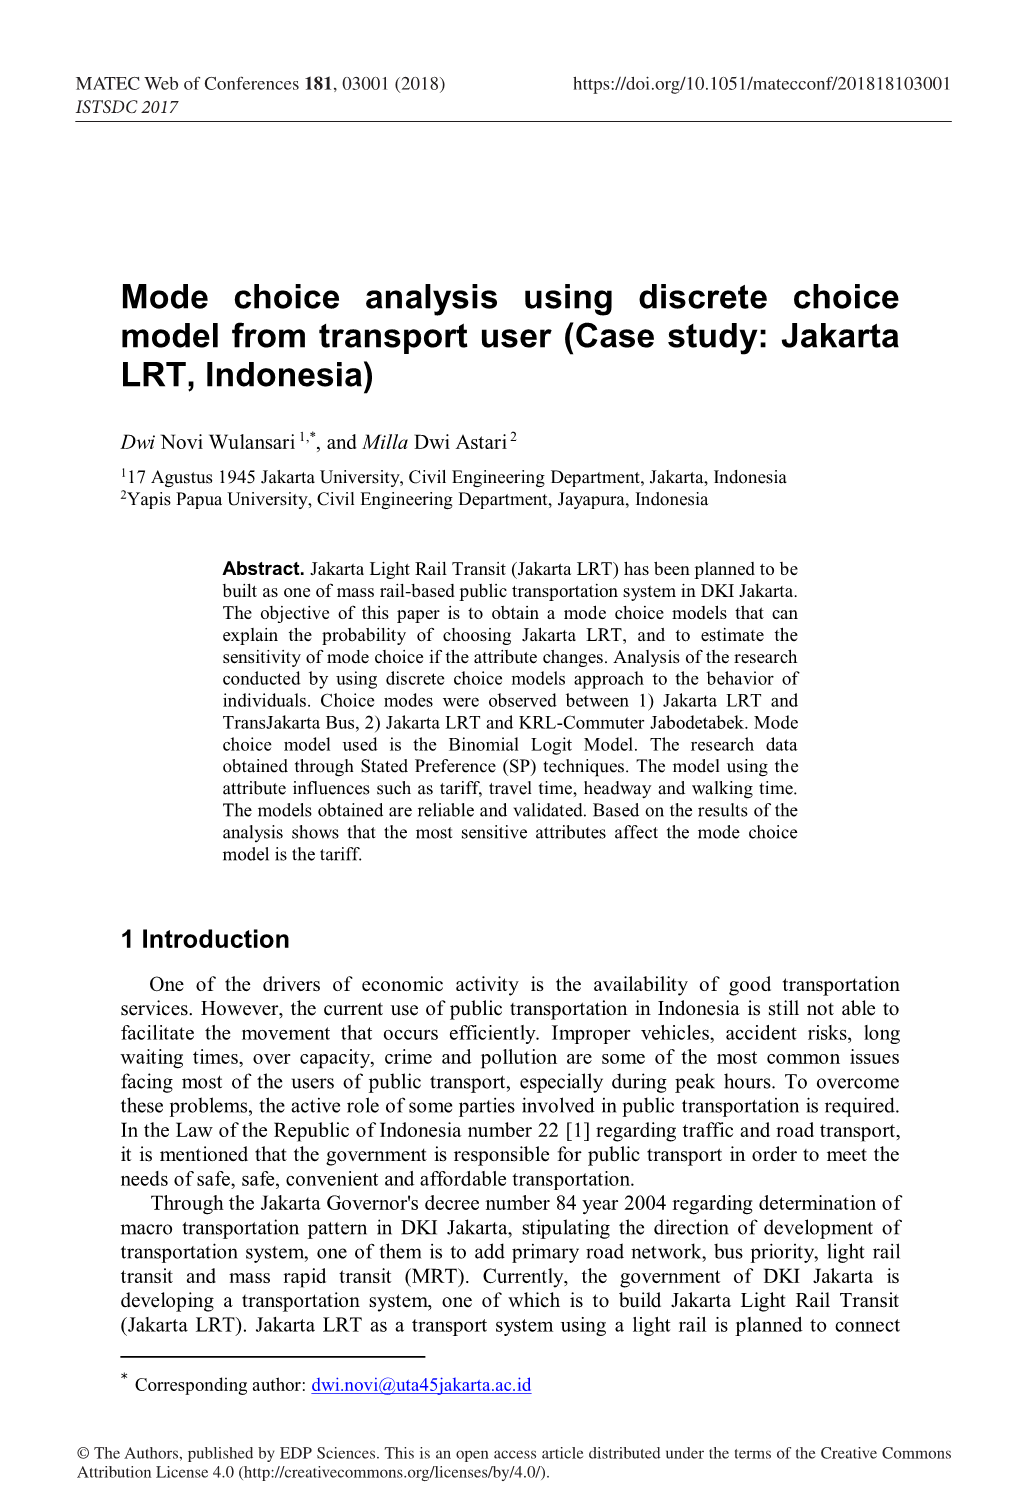 Mode Choice Analysis Using Discrete Choice Model from Transport User (Case Study: Jakarta LRT, Indonesia)